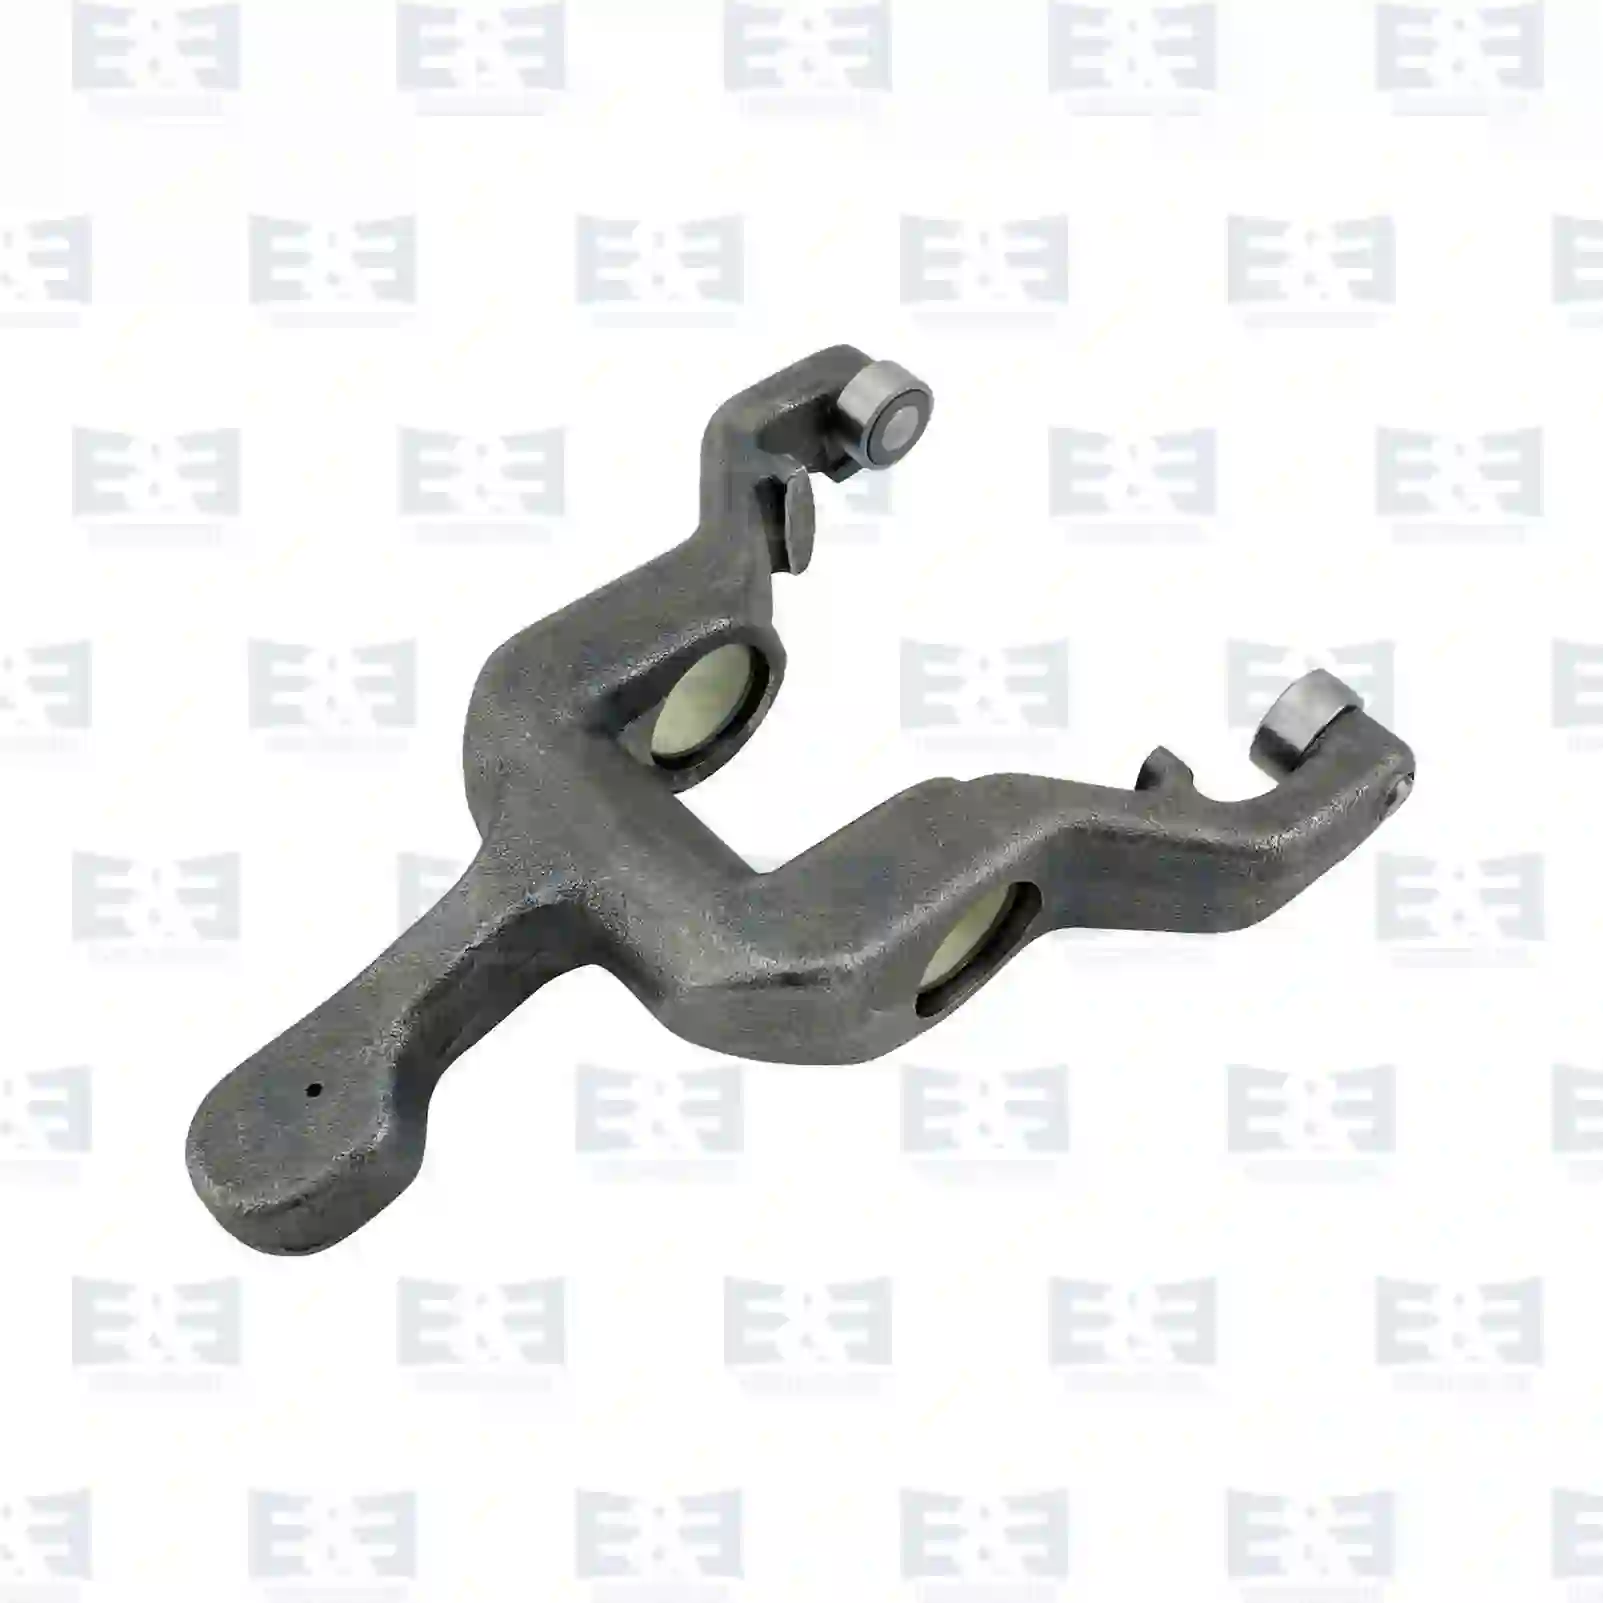  Release fork || E&E Truck Spare Parts | Truck Spare Parts, Auotomotive Spare Parts